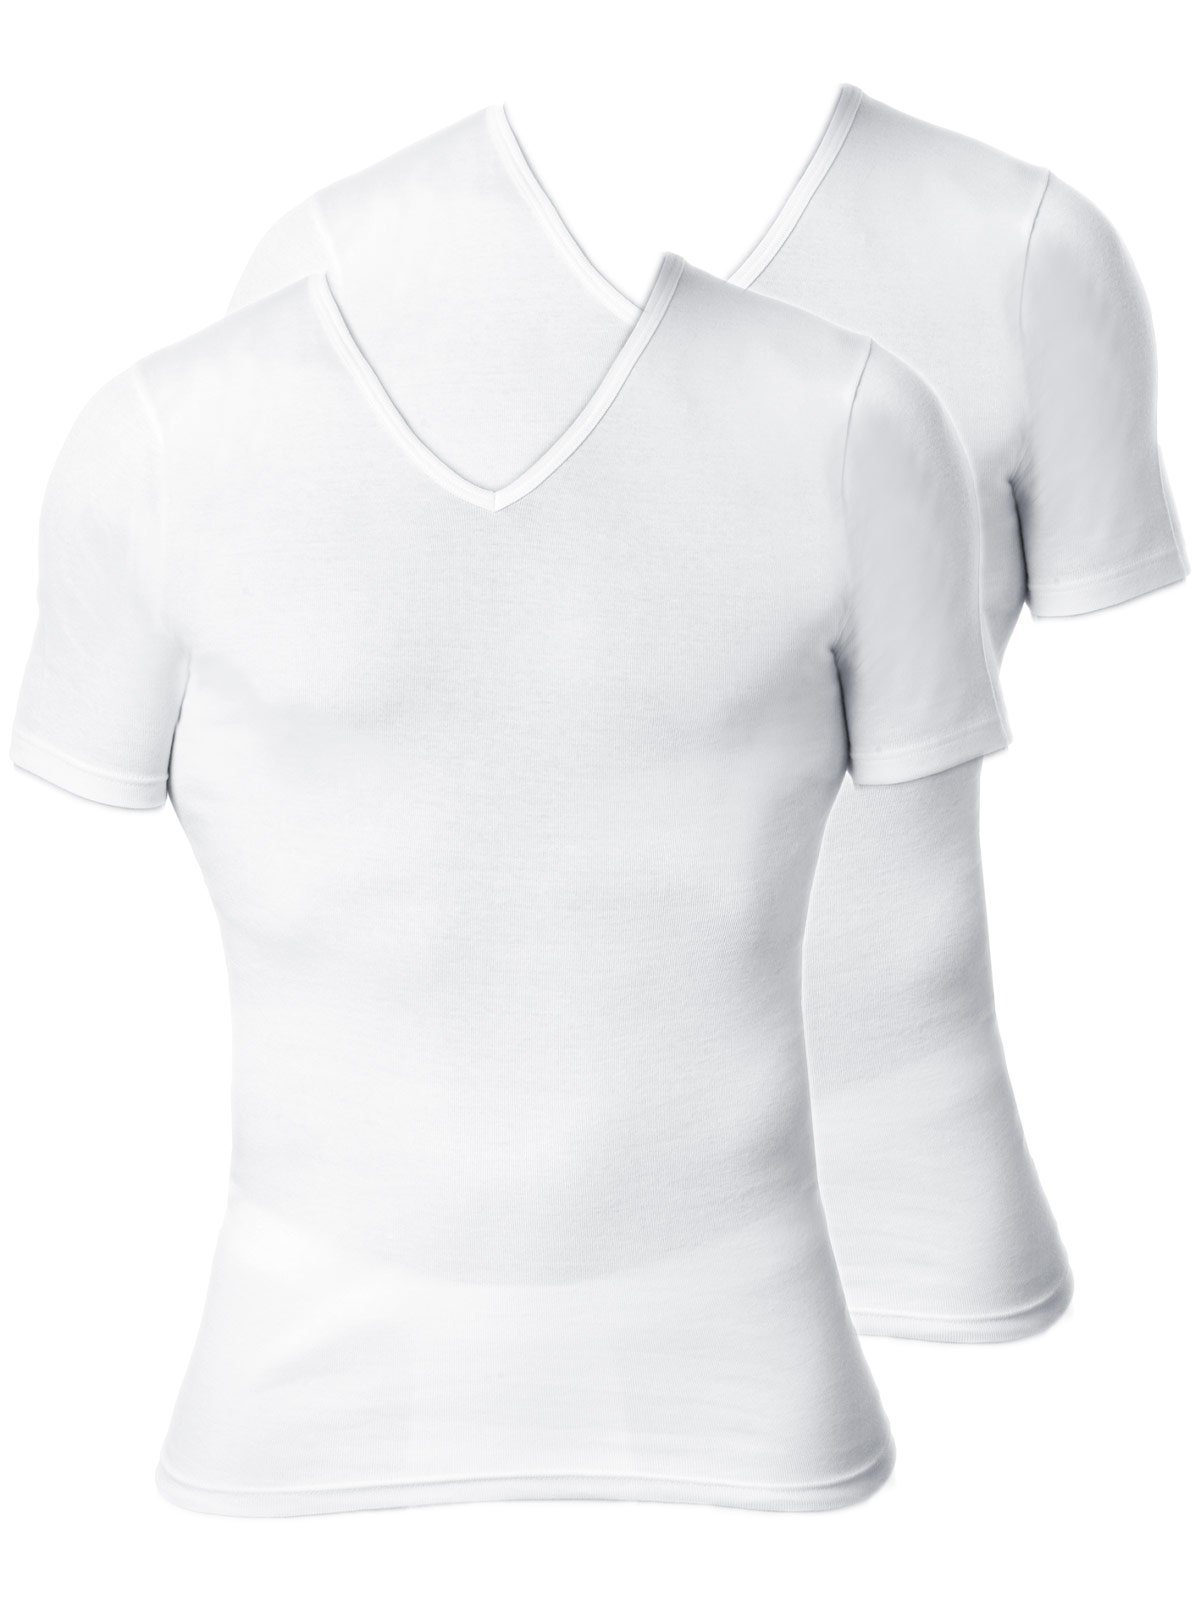 (Spar-Set, weiss 4-St) KUMPF schwarz Markenqualität T-Shirt Cotton Herren 4er Sparpack Unterziehshirt Bio hohe